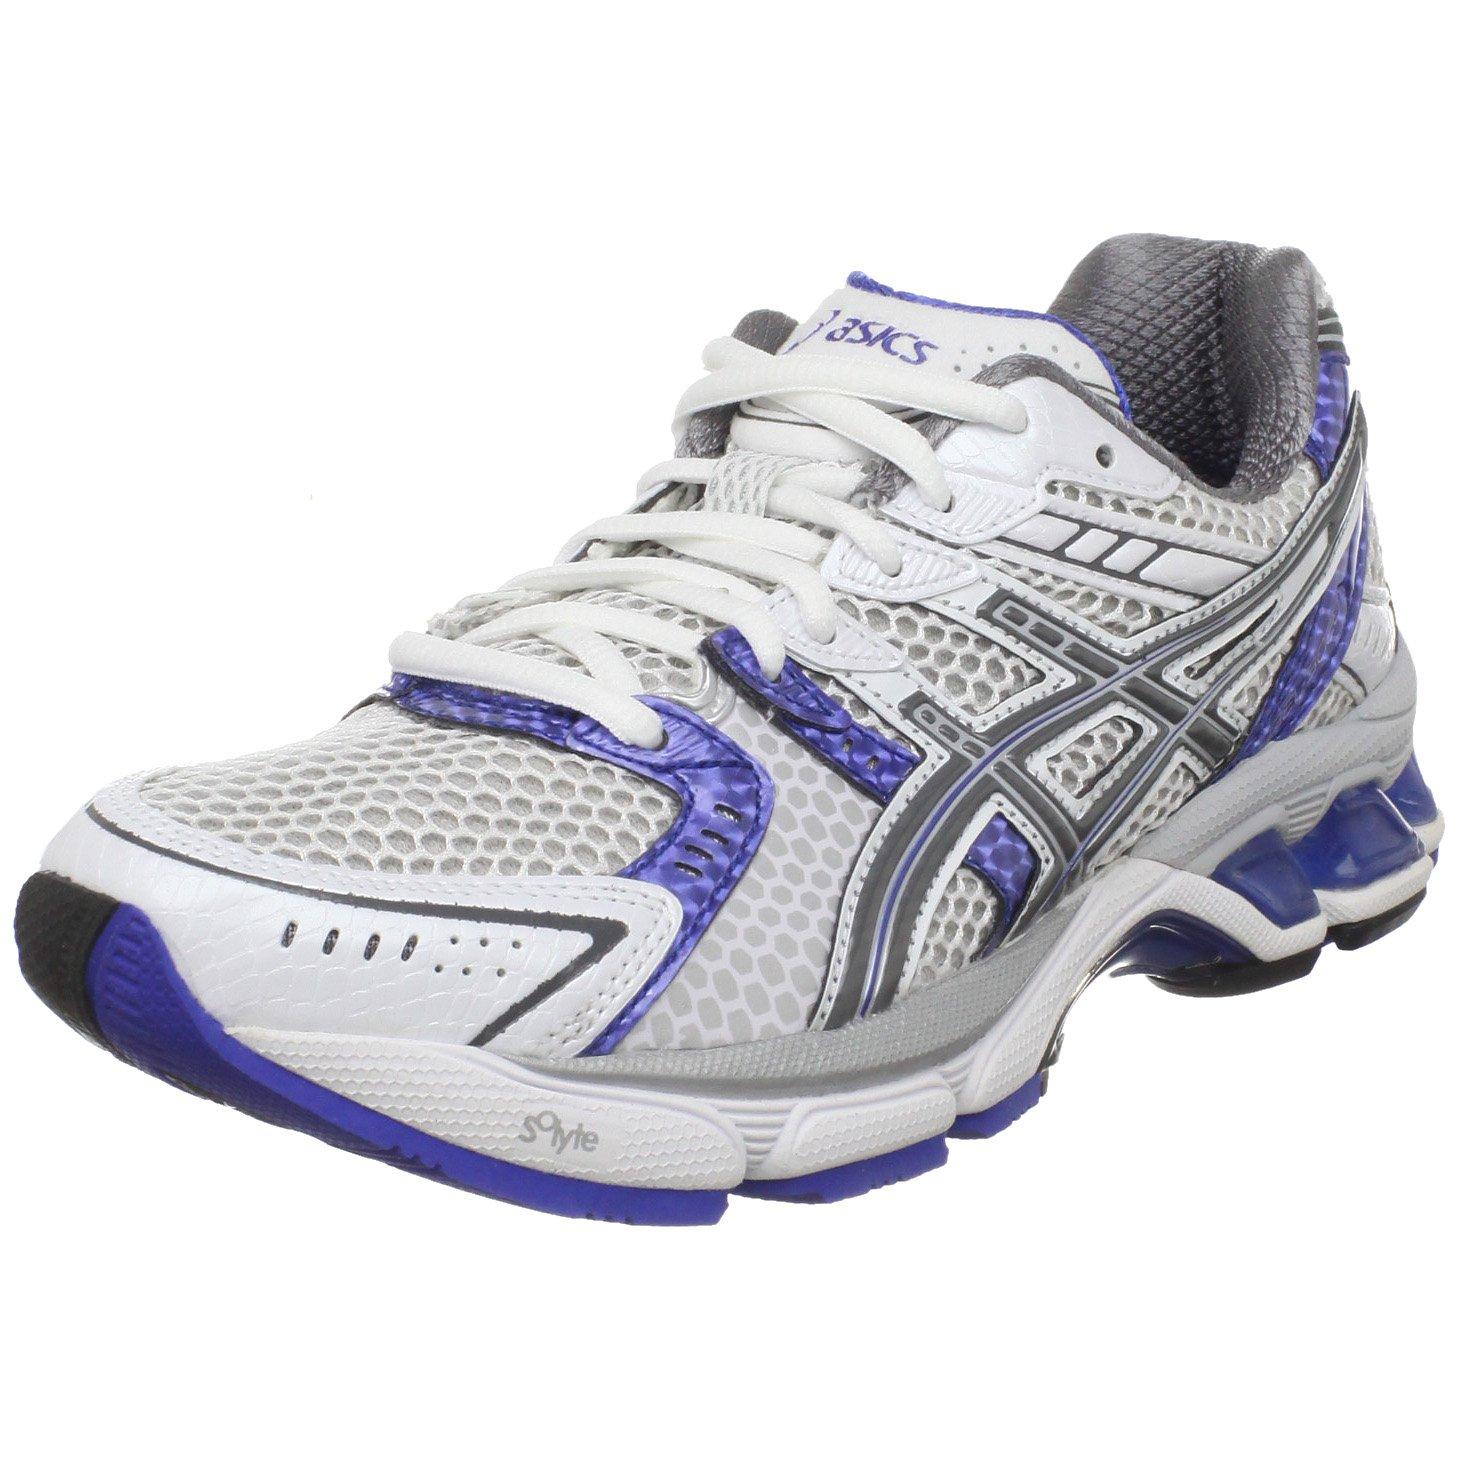 Asics Gel-3020 Running Shoe,white/titanium/blue Iris,6.5 D Us - Save 13% |  Lyst